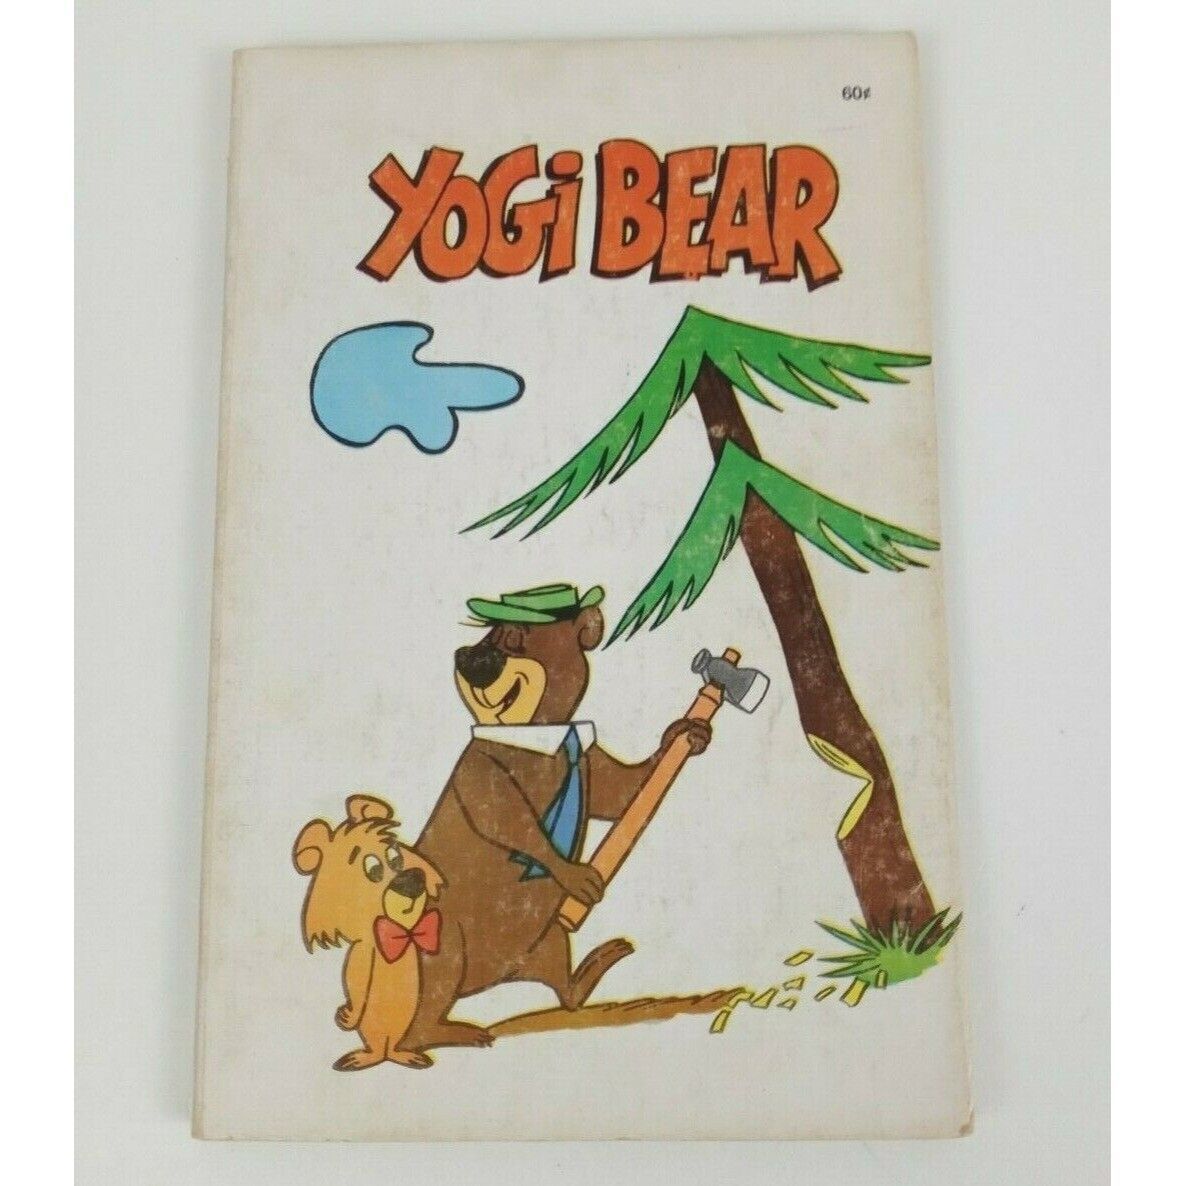 Vtg 1972 Yogi Bear Paperback Charlton Press Xerox Publications Book Club Edition - $9.69